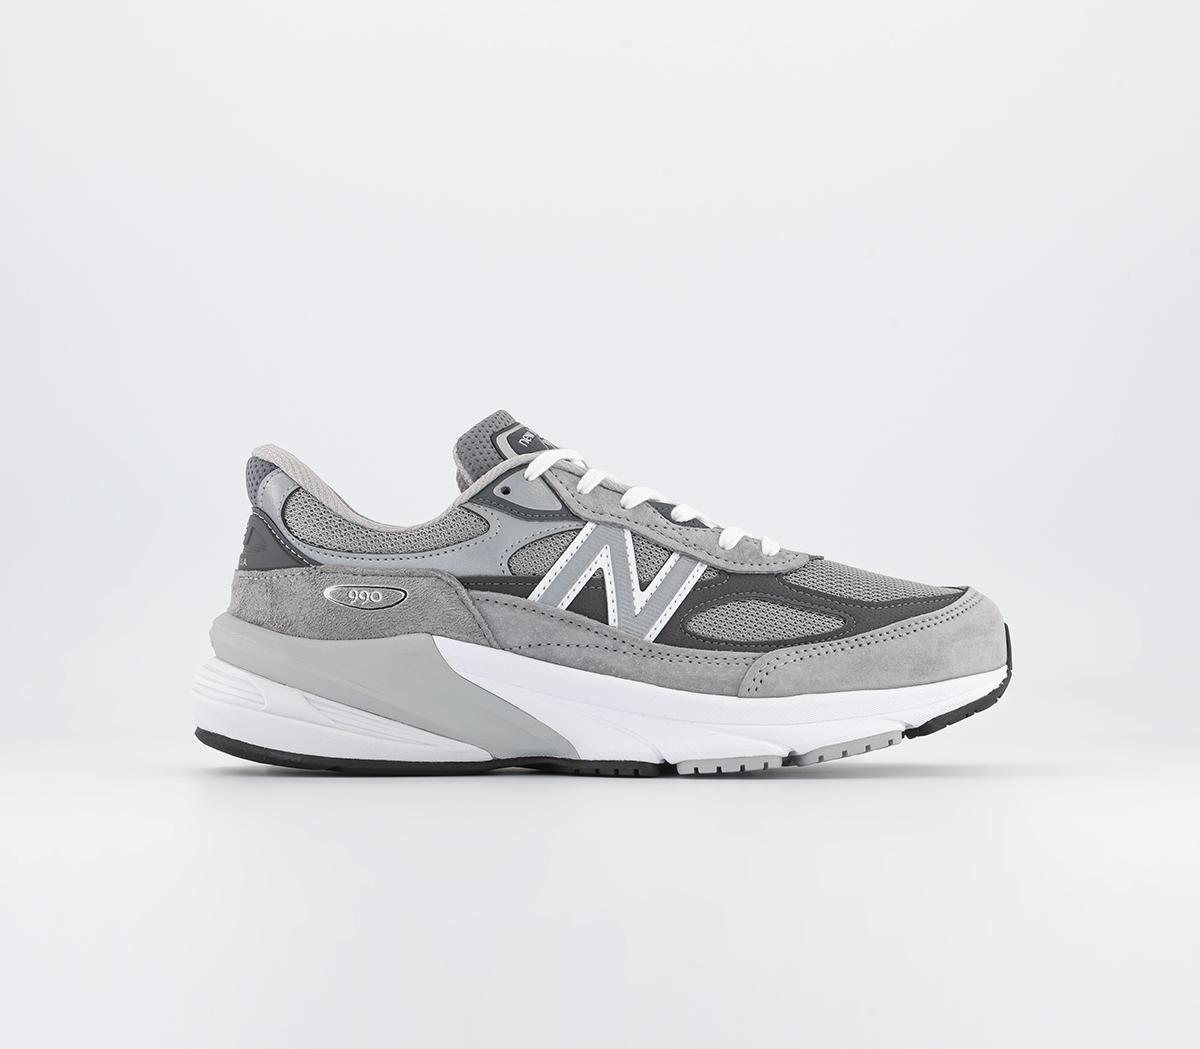 New Balance990v6 Trainers Grey